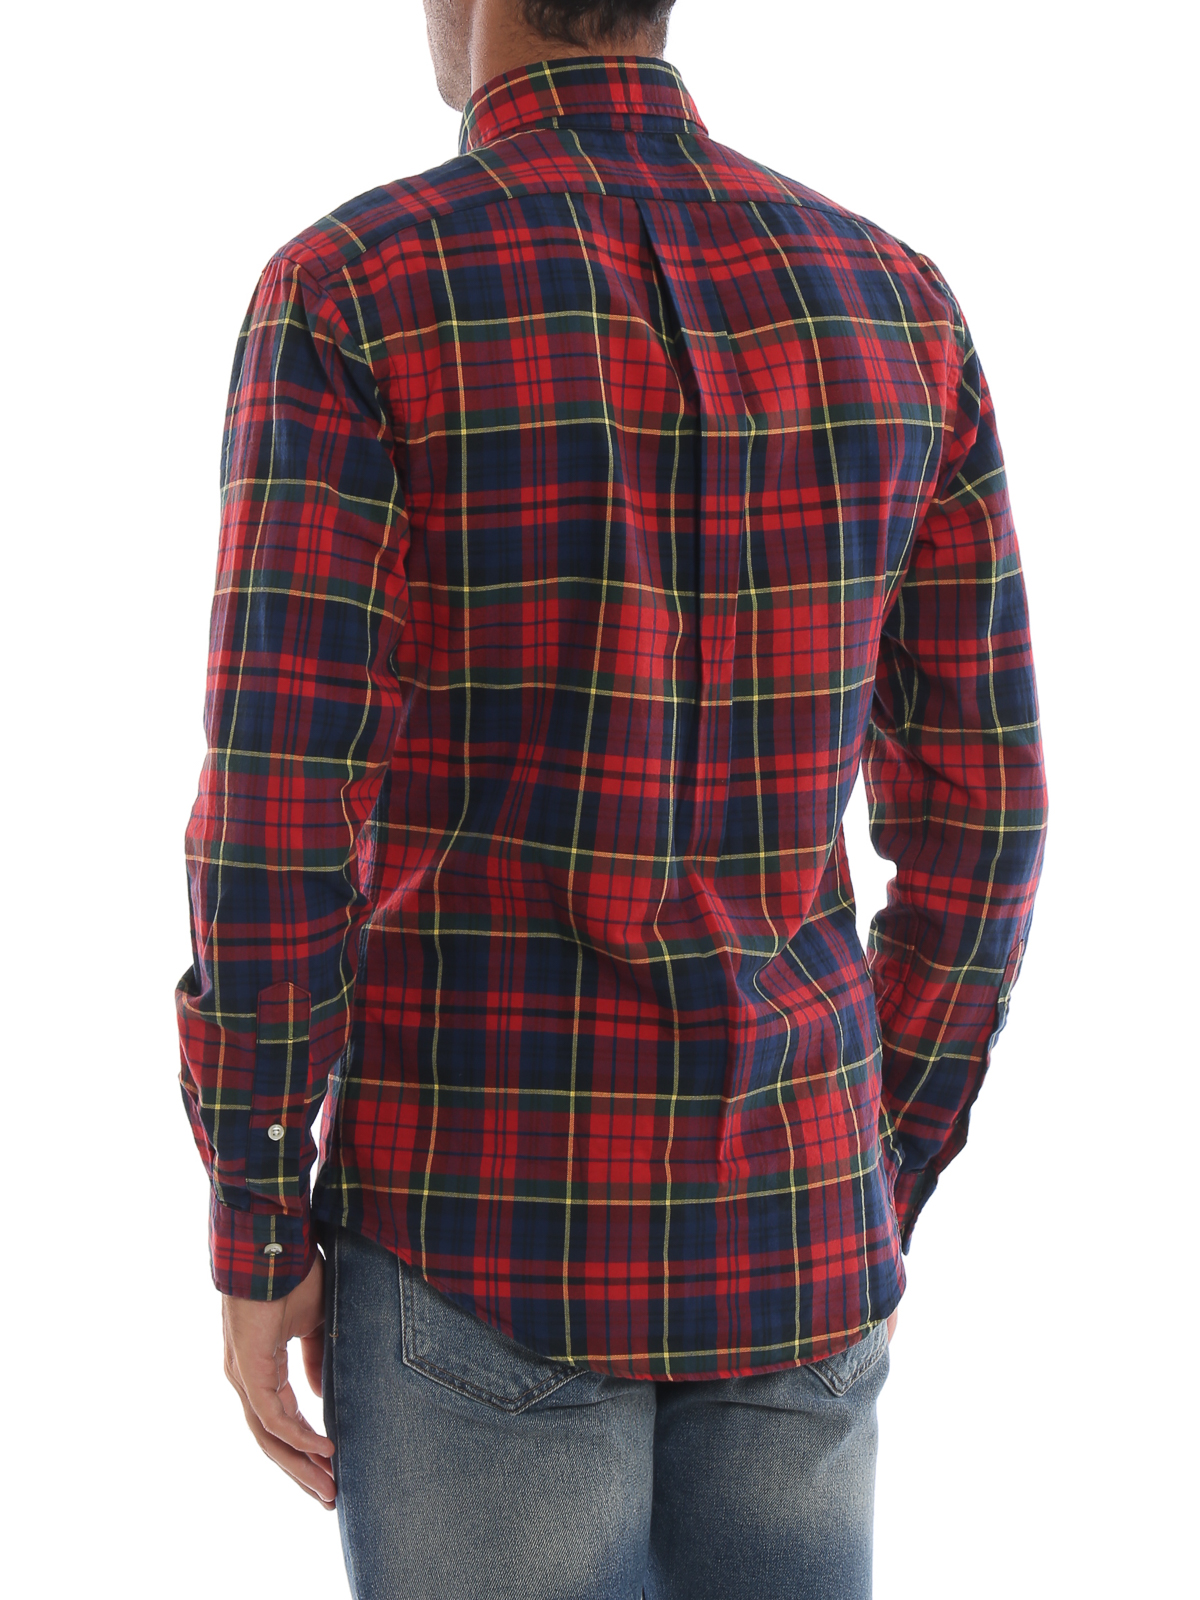 evolutie klimaat Macadam Shirts Ralph Lauren - Red tartan cotton b/d slim fit shirt - 710723608006